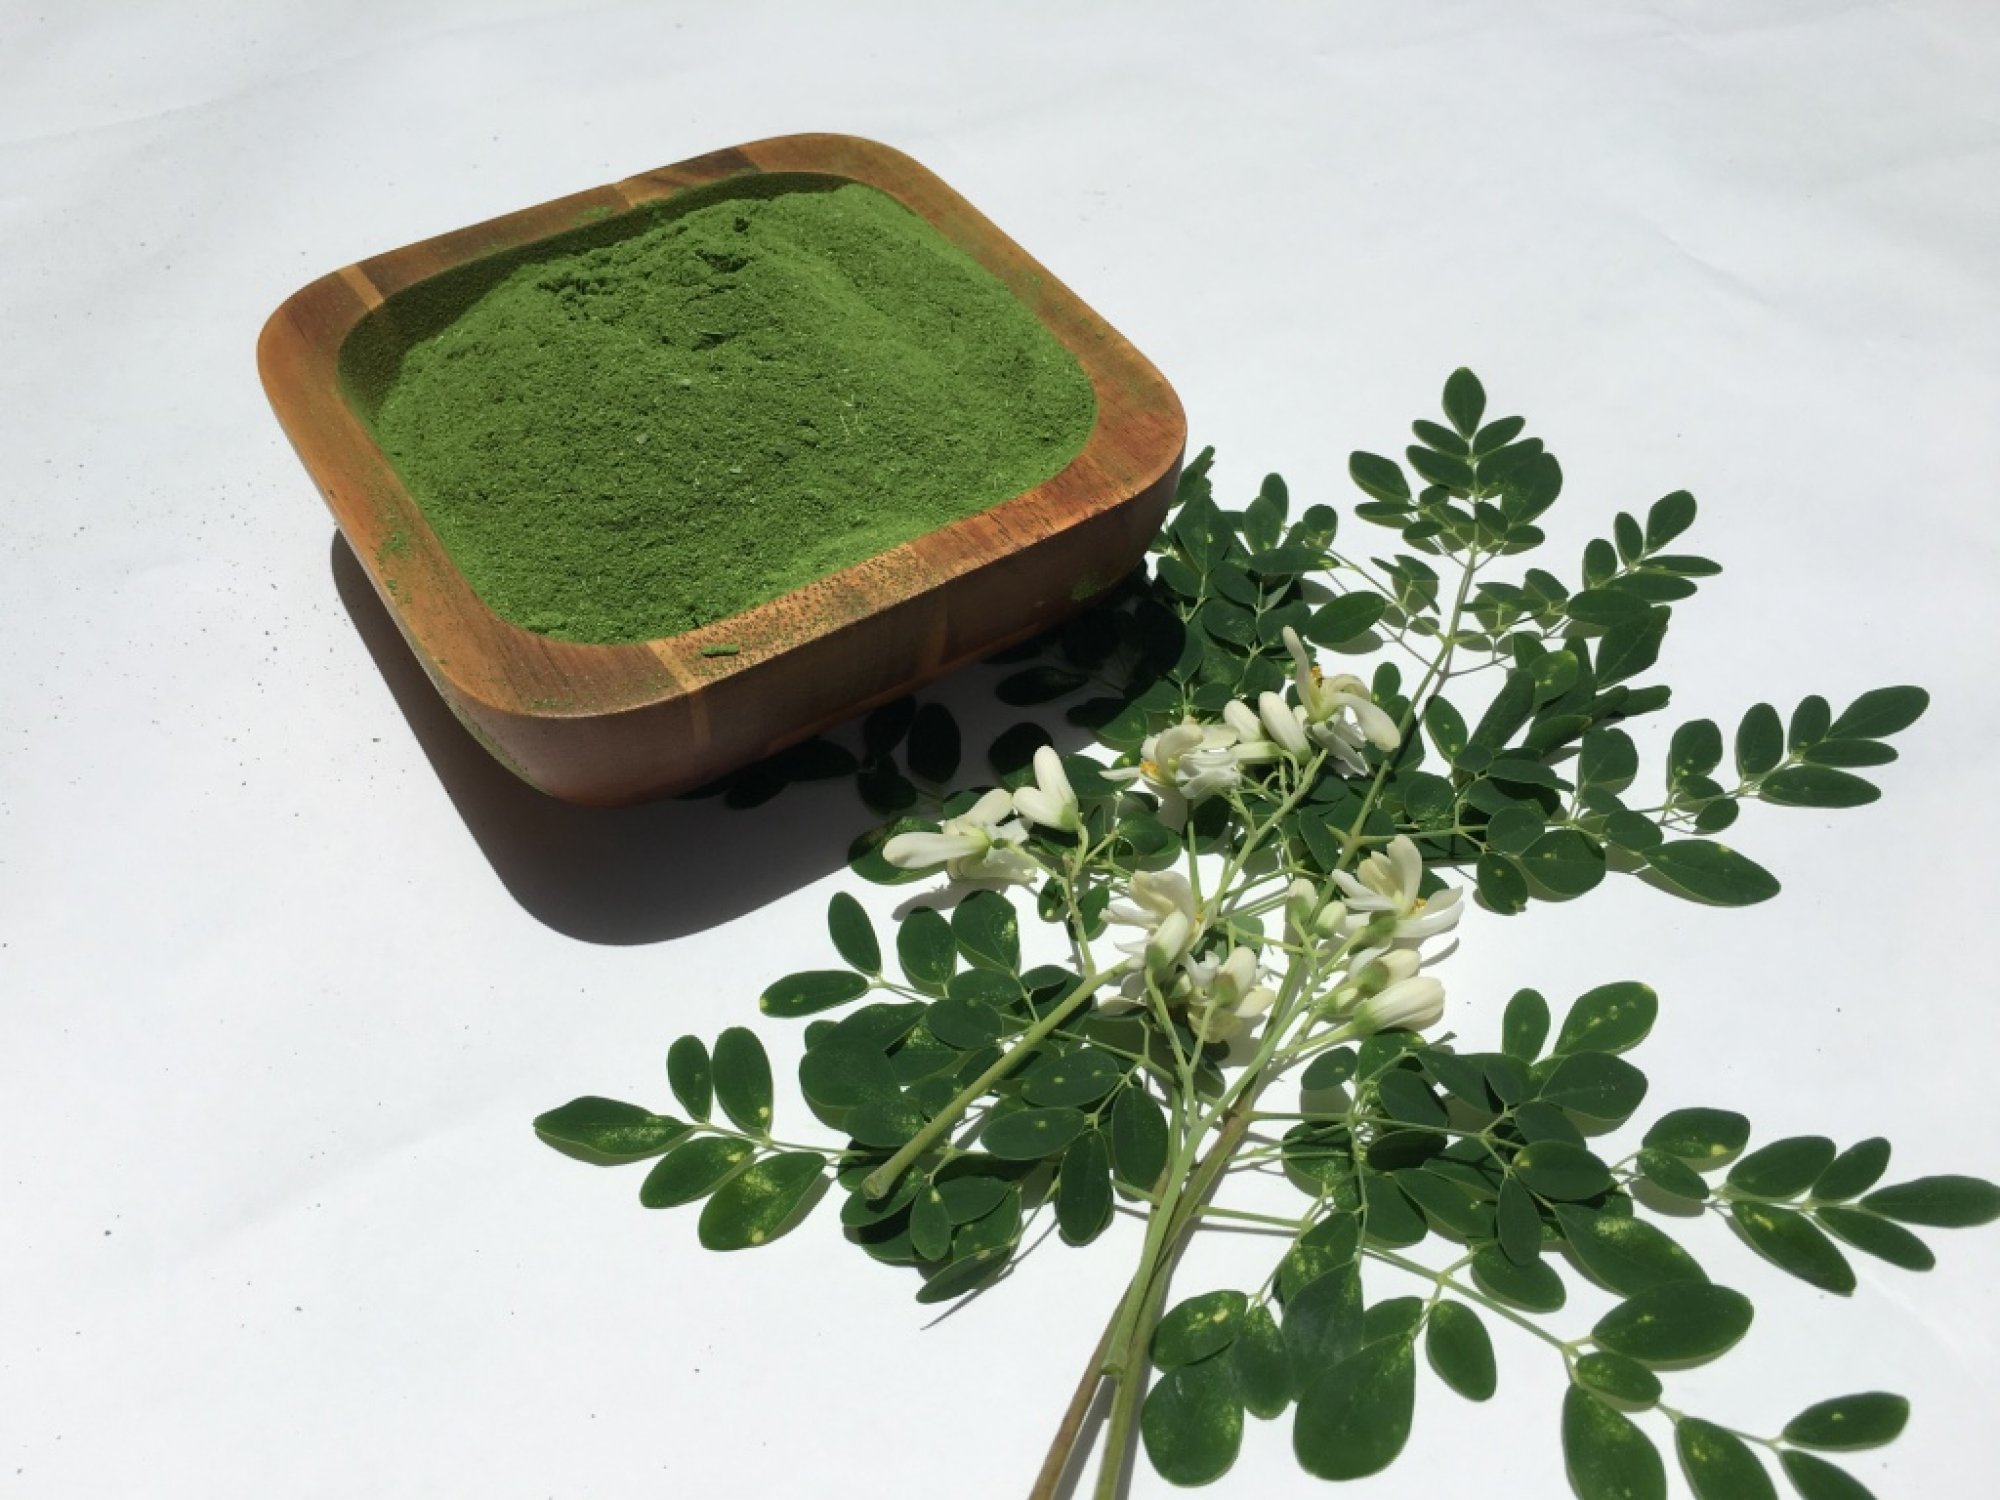 How to make moringa leaf powder